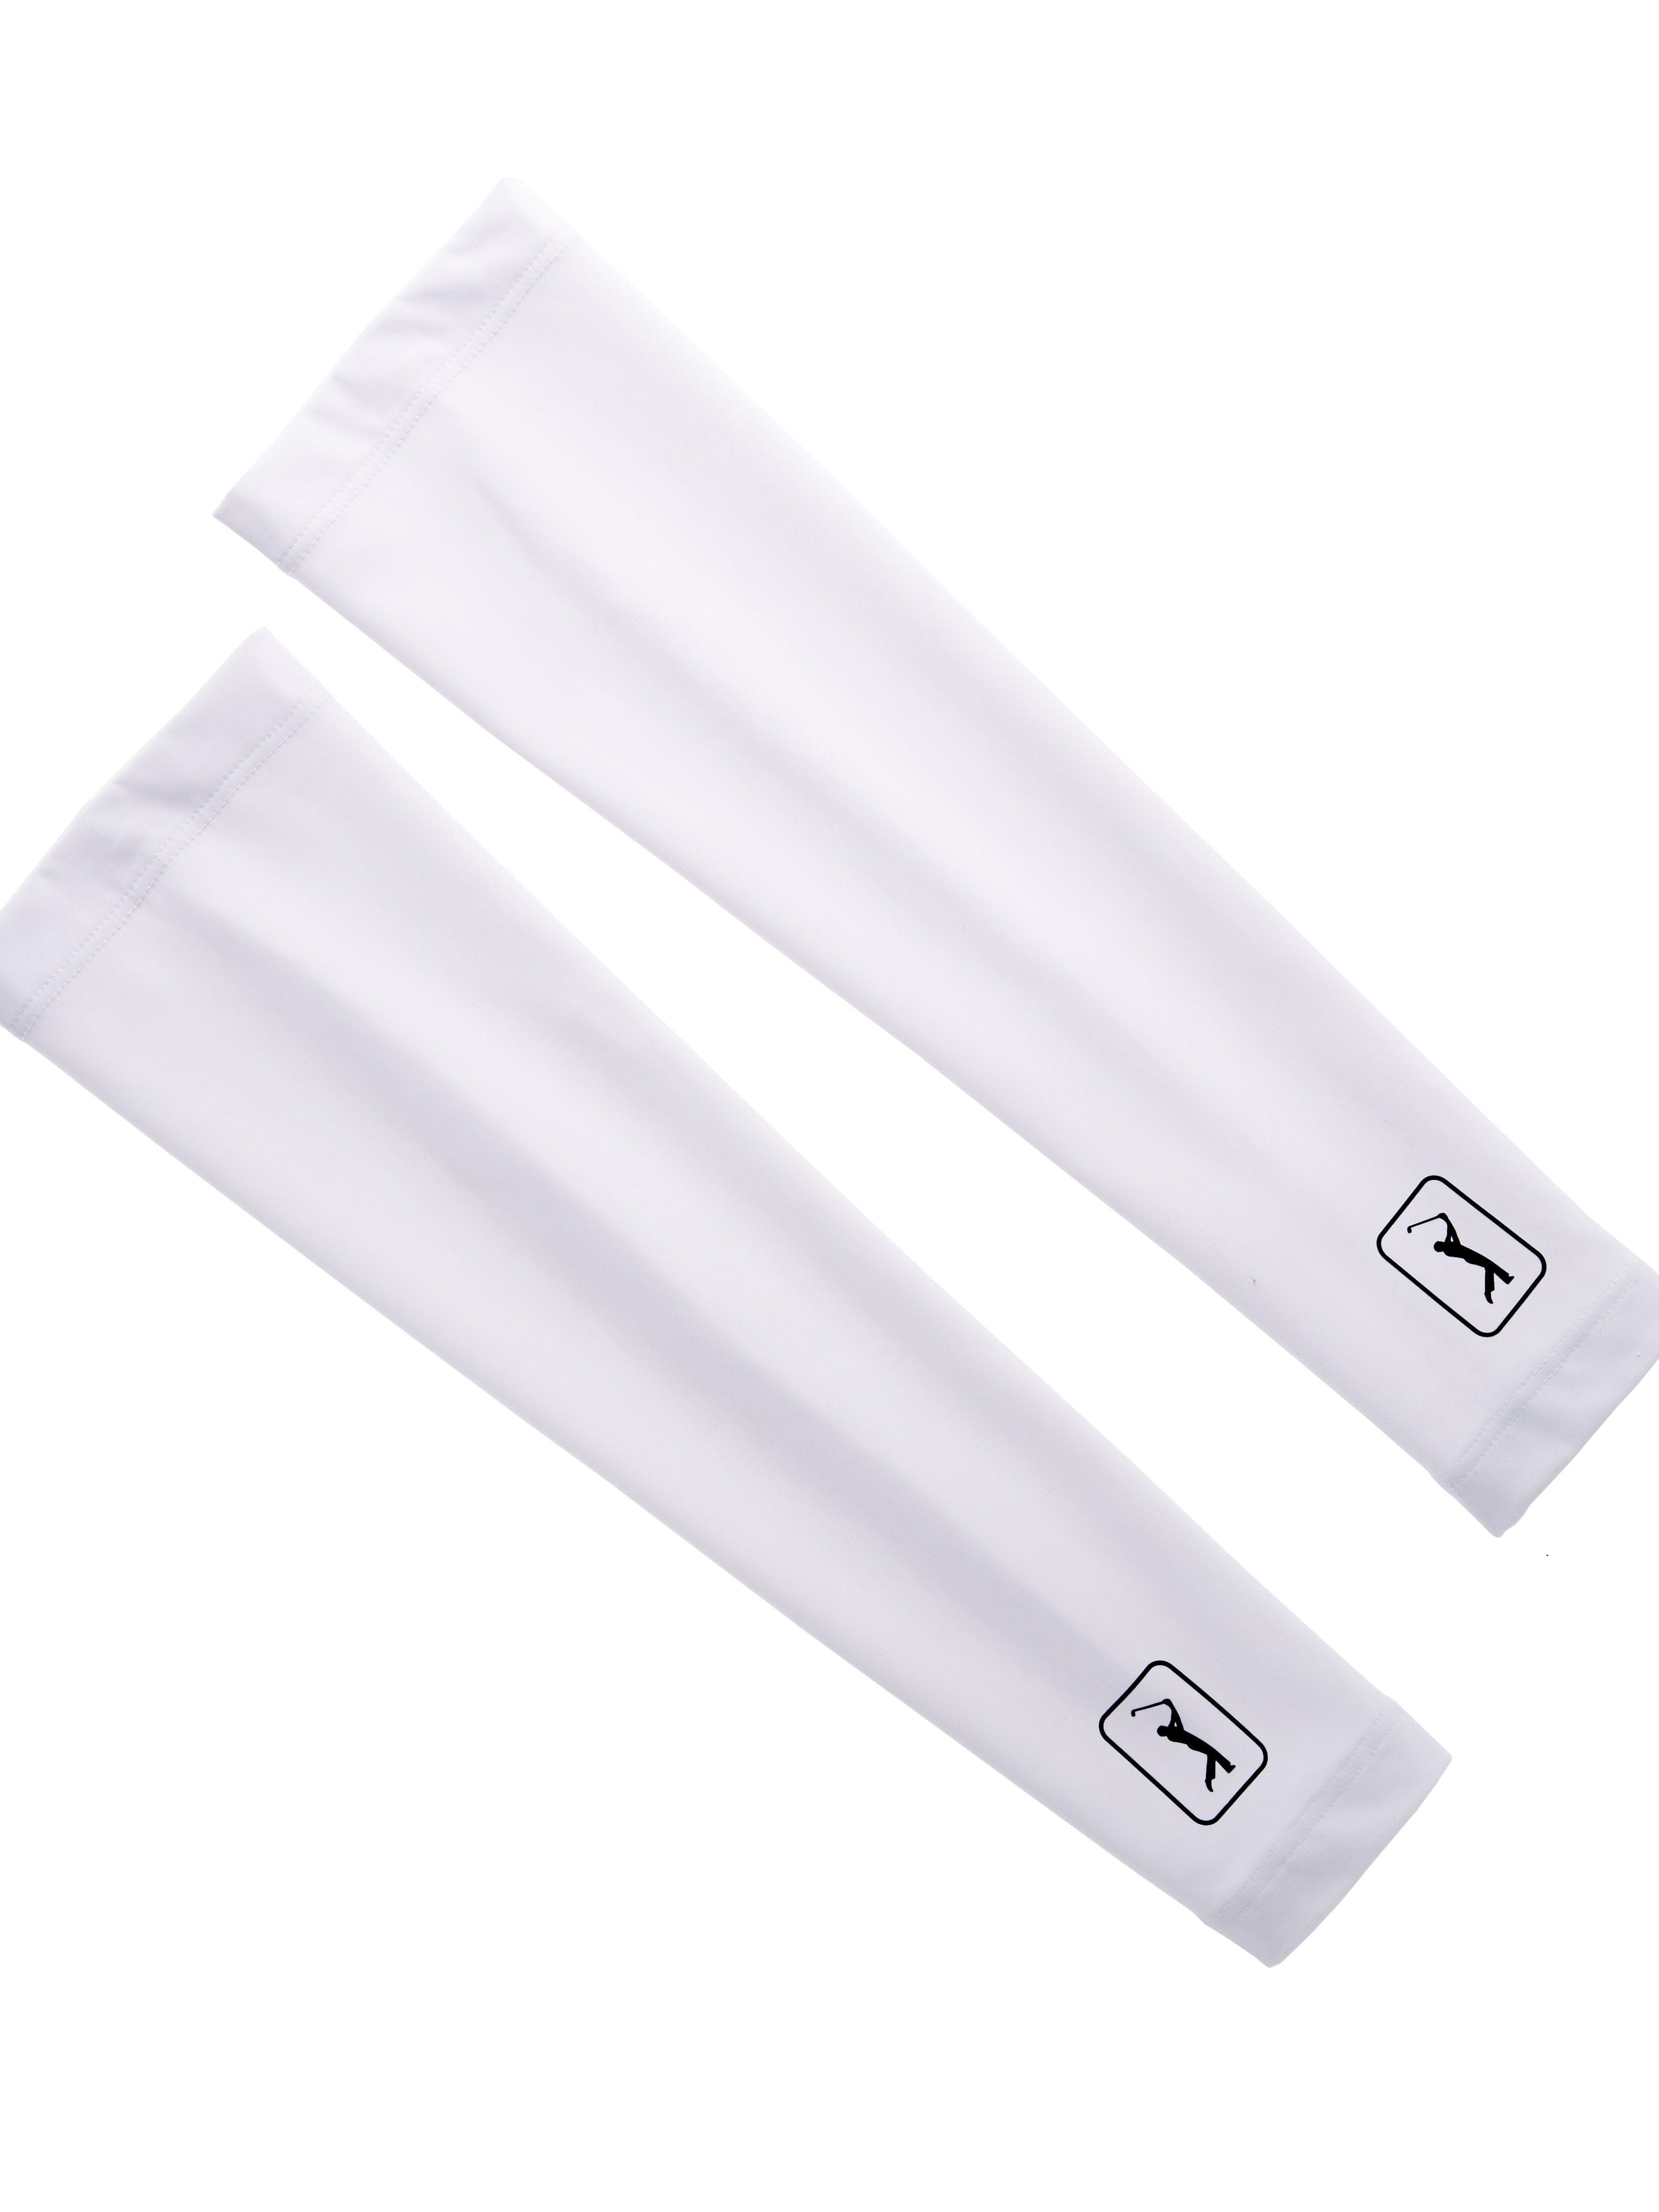 PGA TOUR Apparel Solar Block Arm Sleeves, Size Large/XL, White, Nylon/Elastane | Golf Apparel Shop